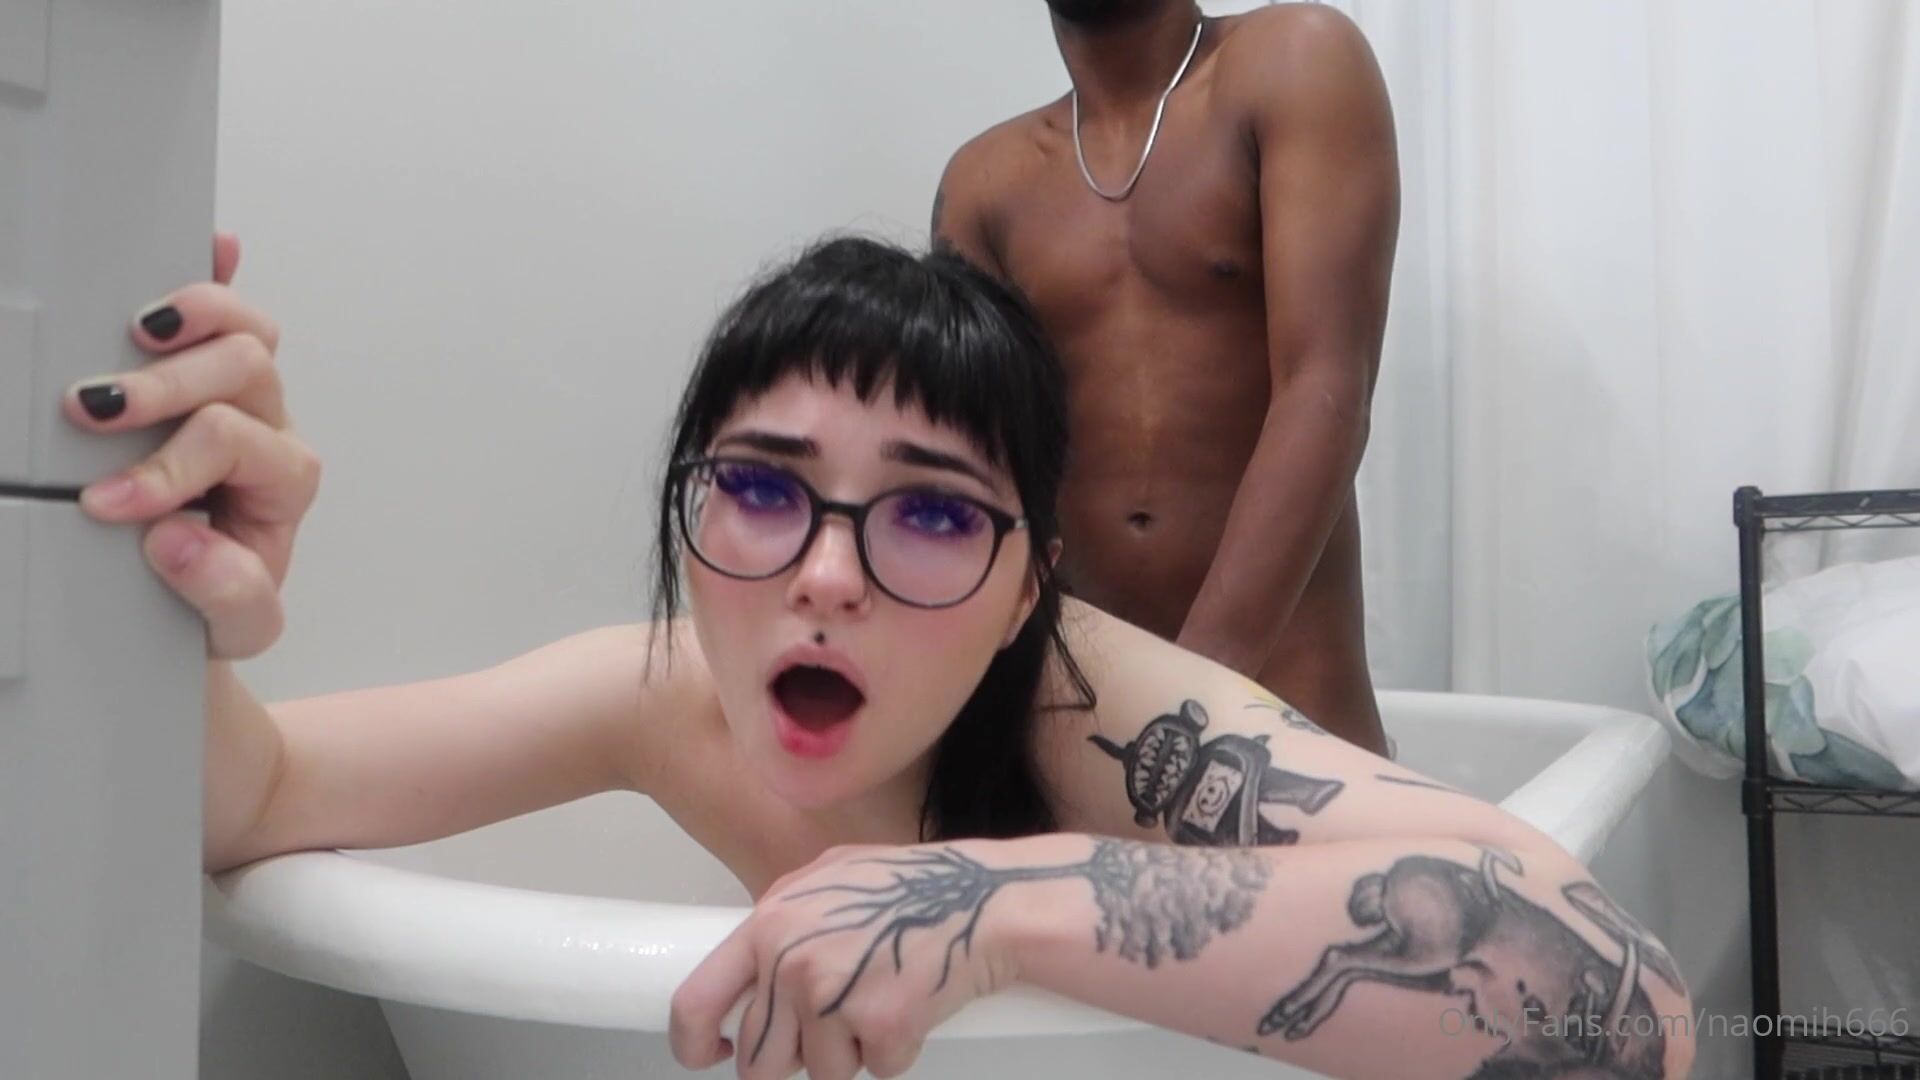 NaomiH666: Bathroom Love